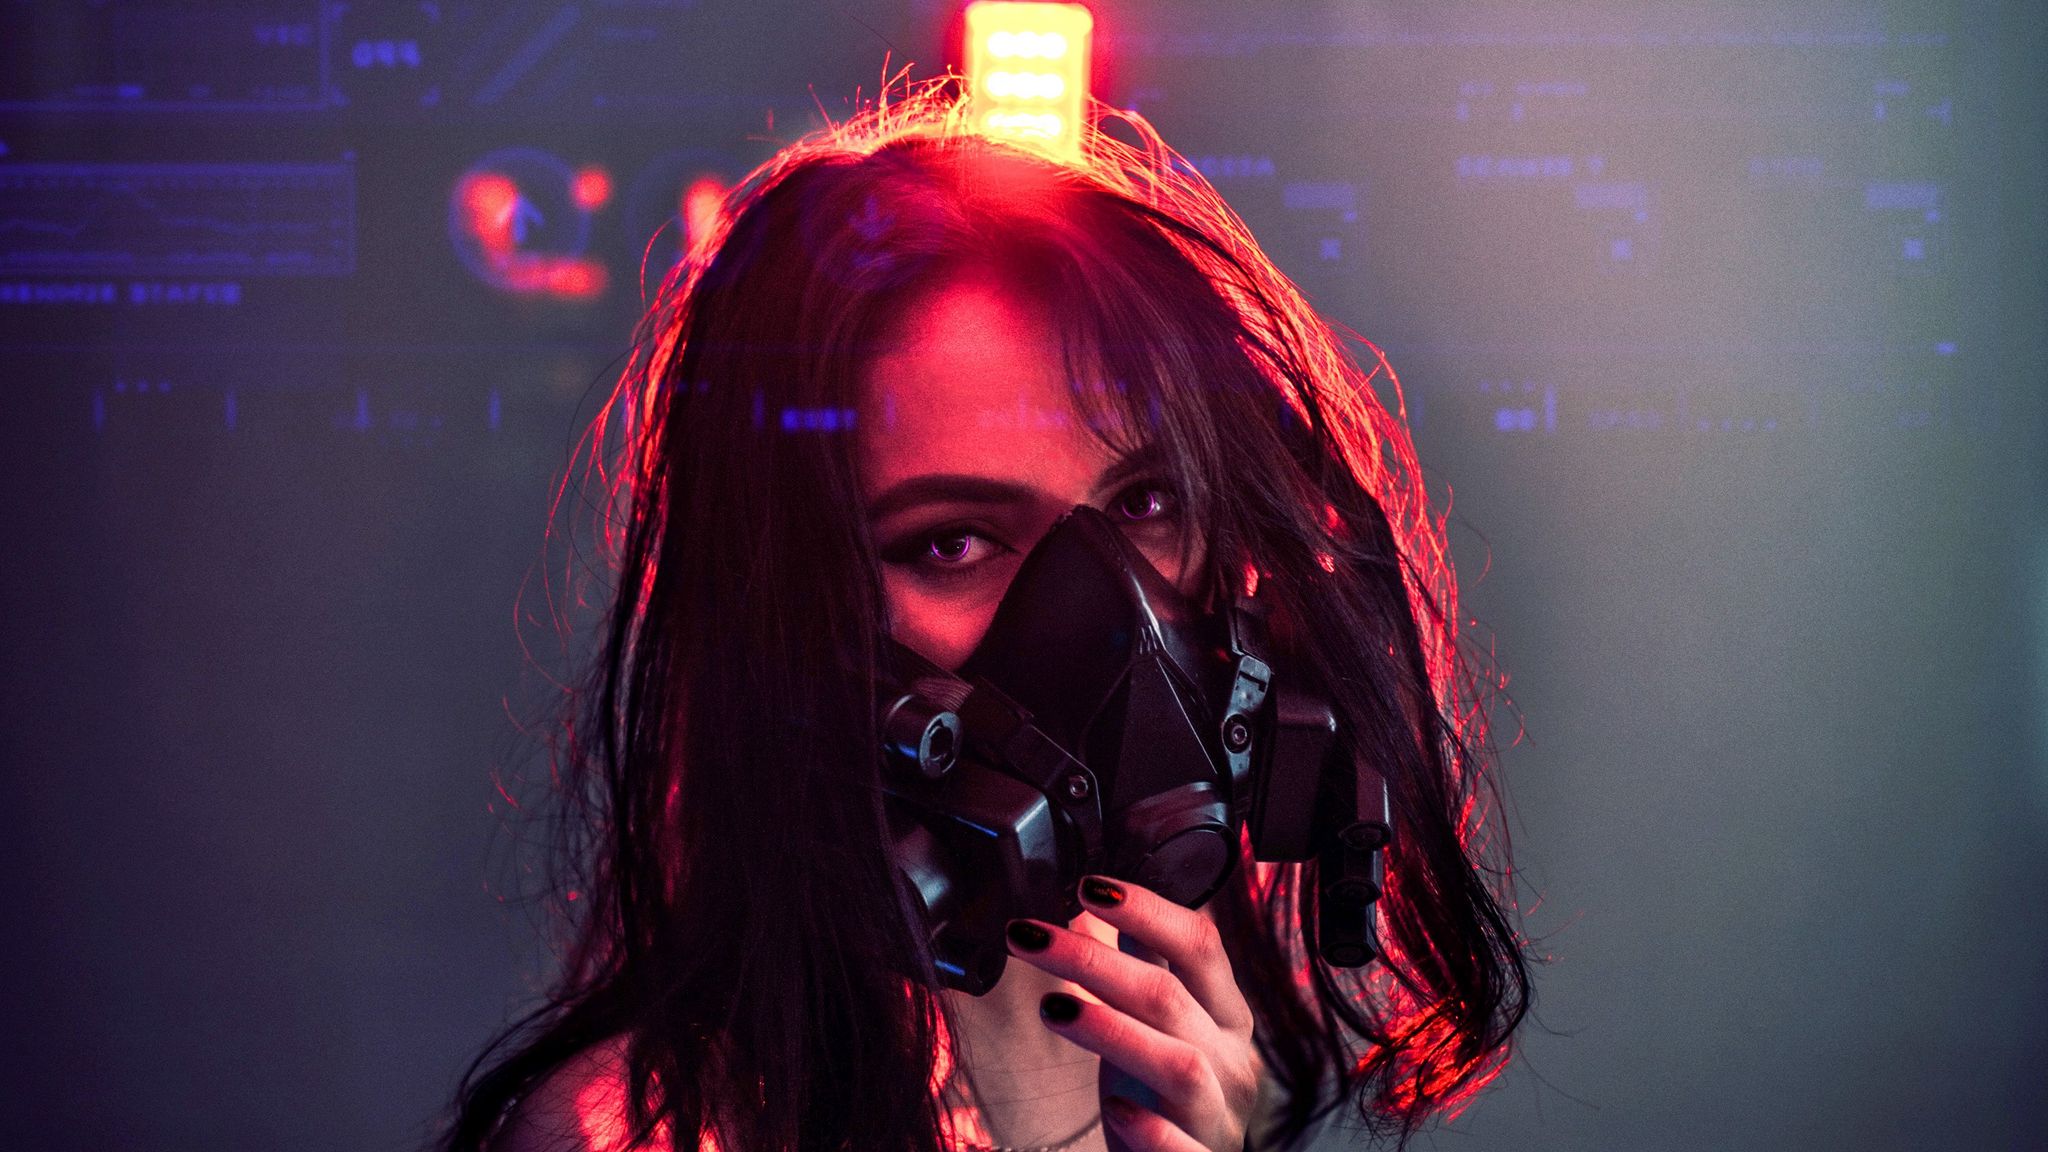 Cyberpunk girl wallpaper engine фото 35